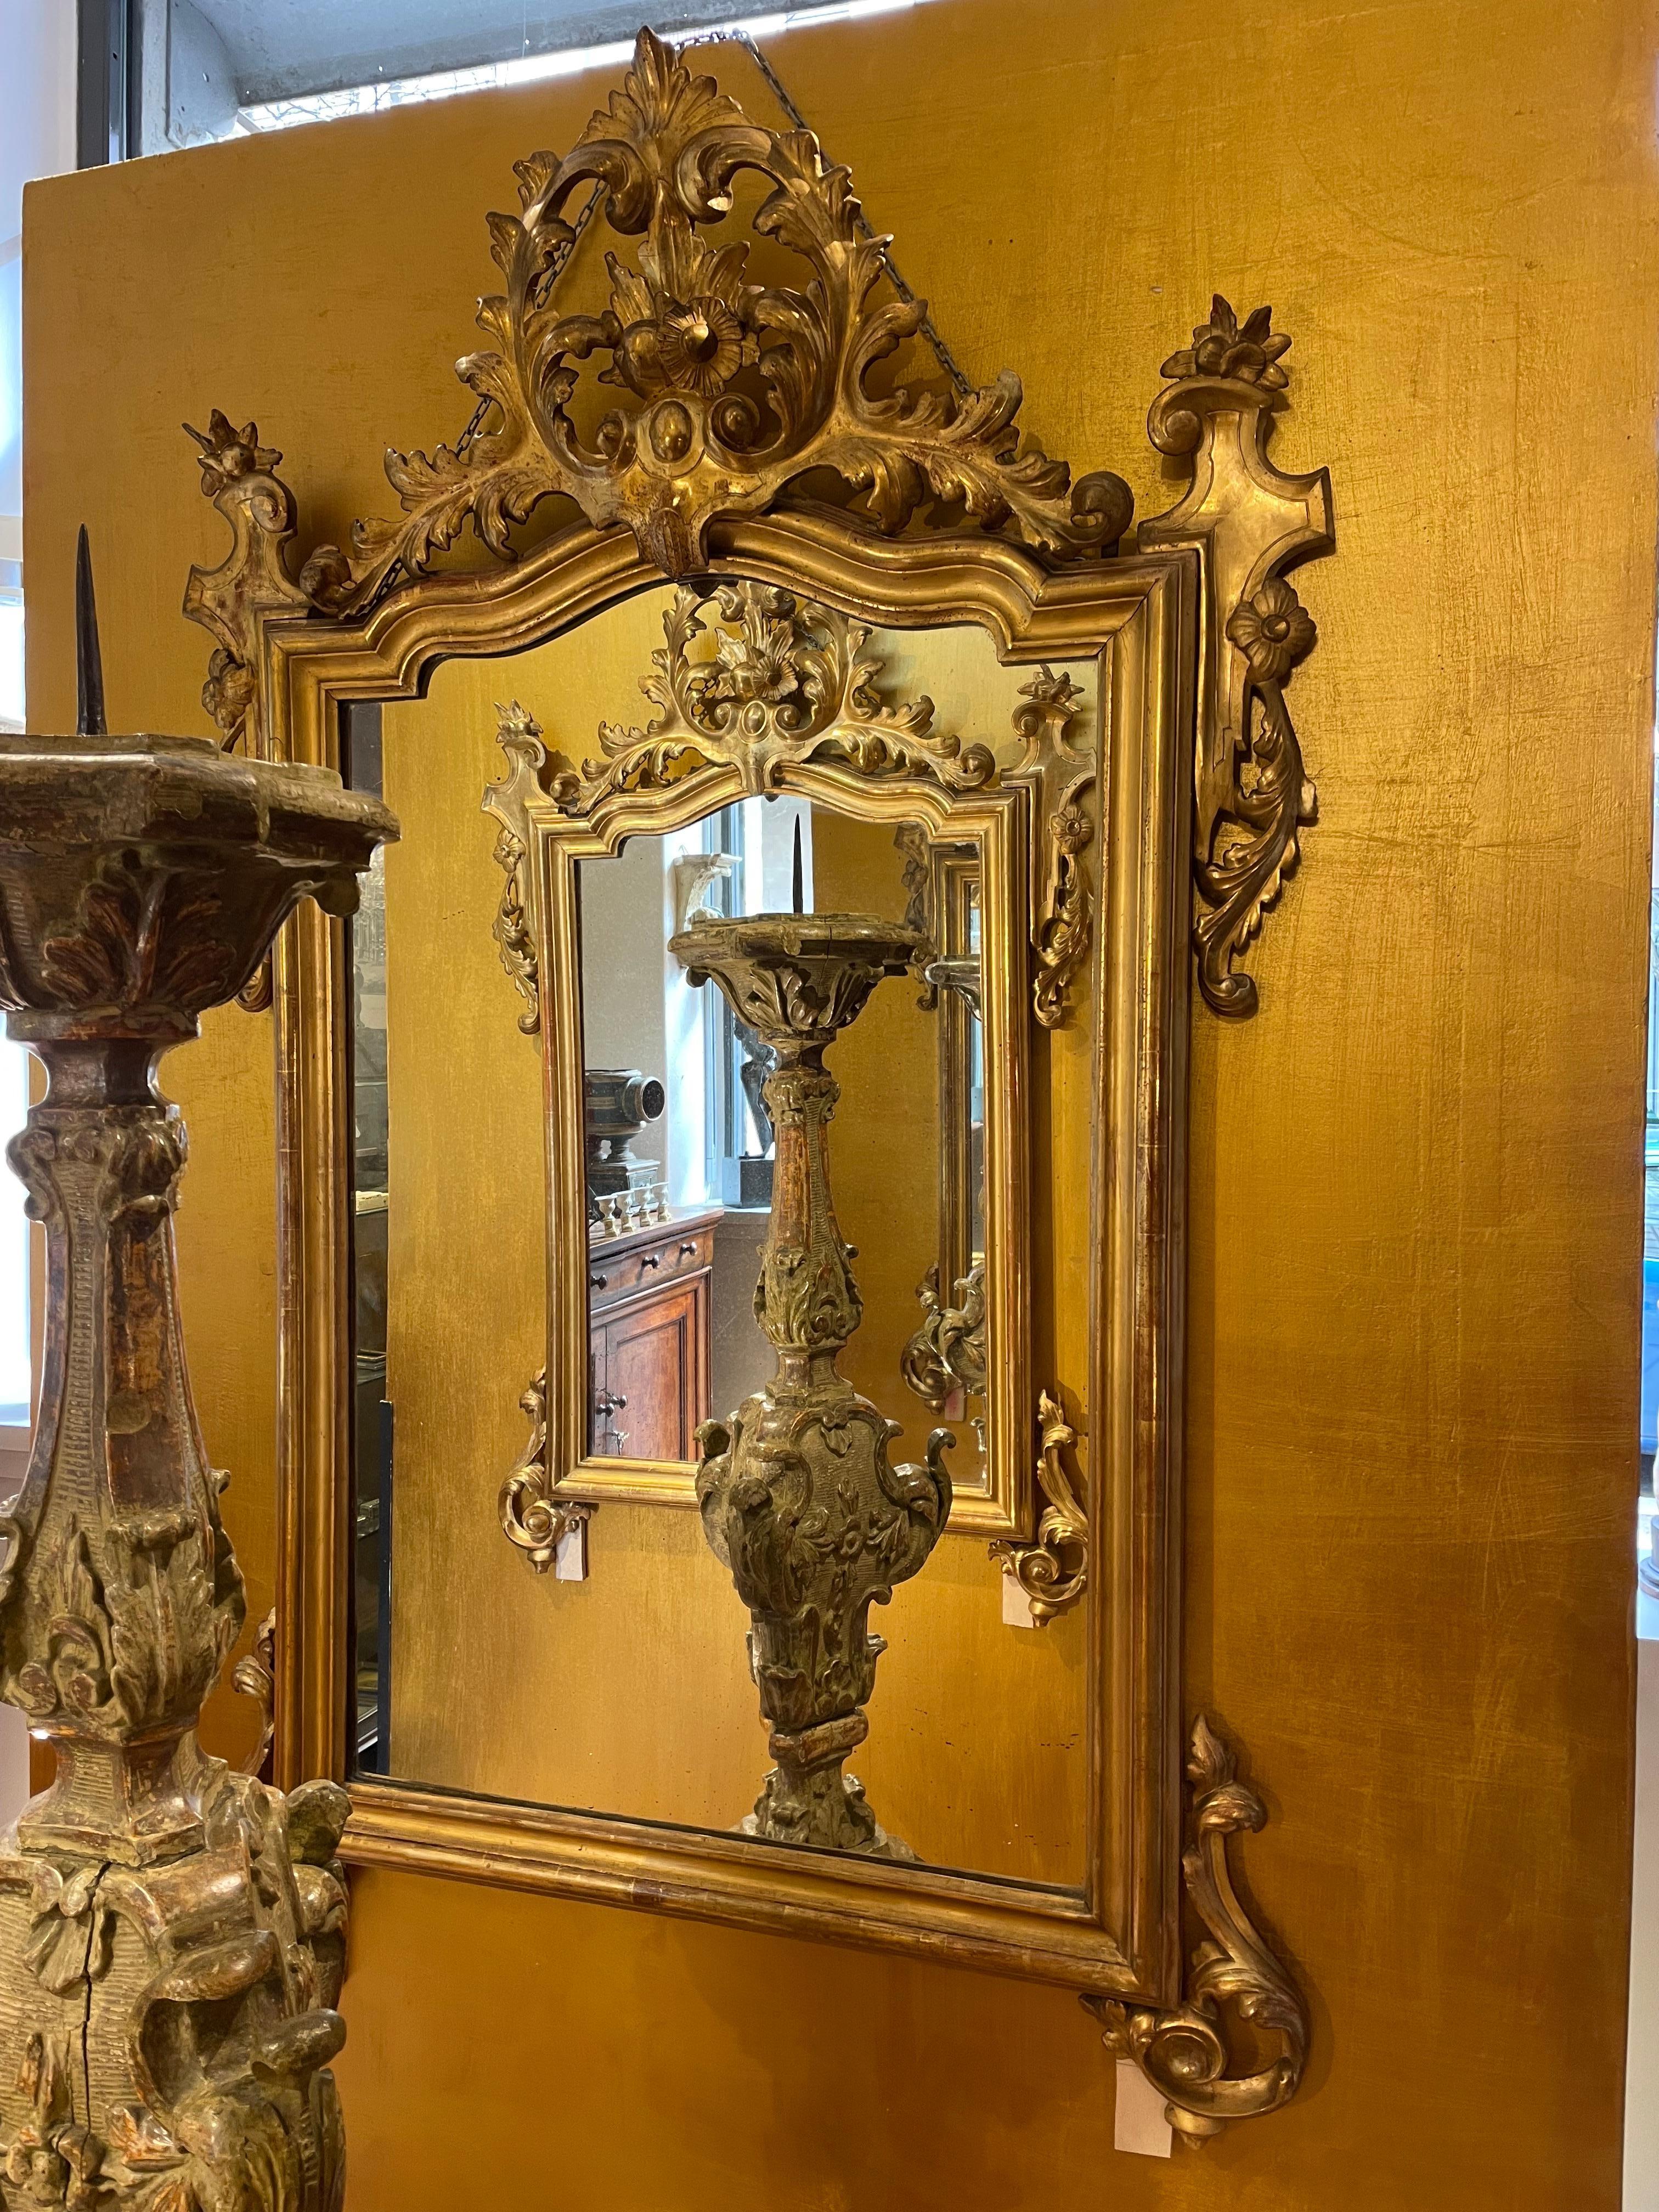 Pair of Italian Giltwood Mirrors 19th Century Neapolitan Louis Philippe Carving 15